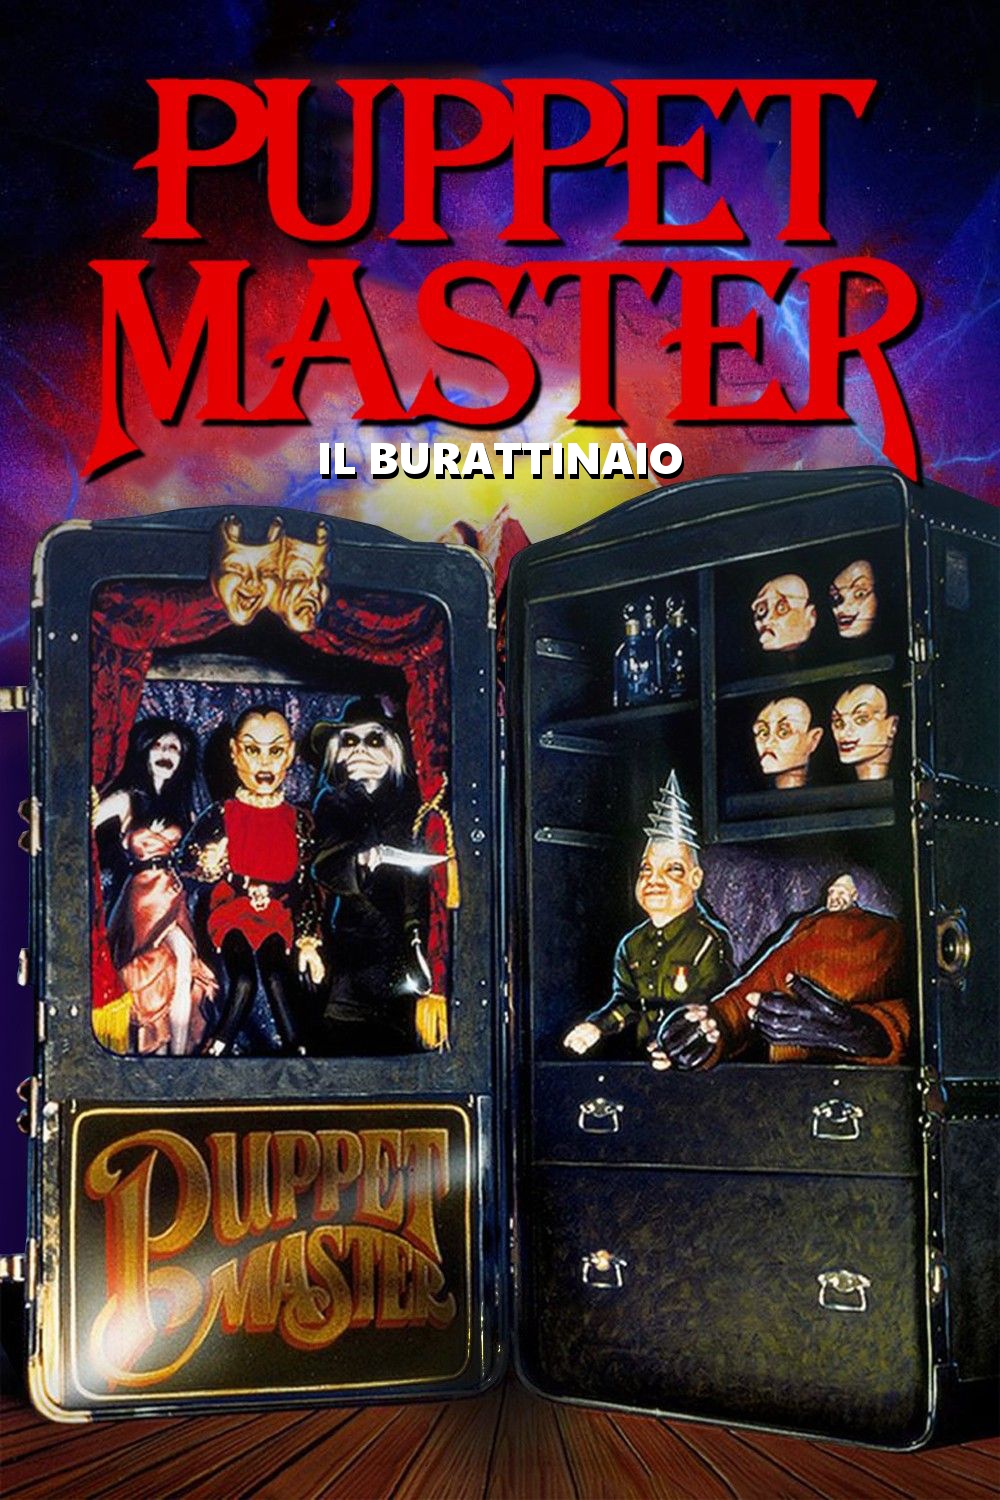 Puppet Master – Il burattinaio [HD] (1989)